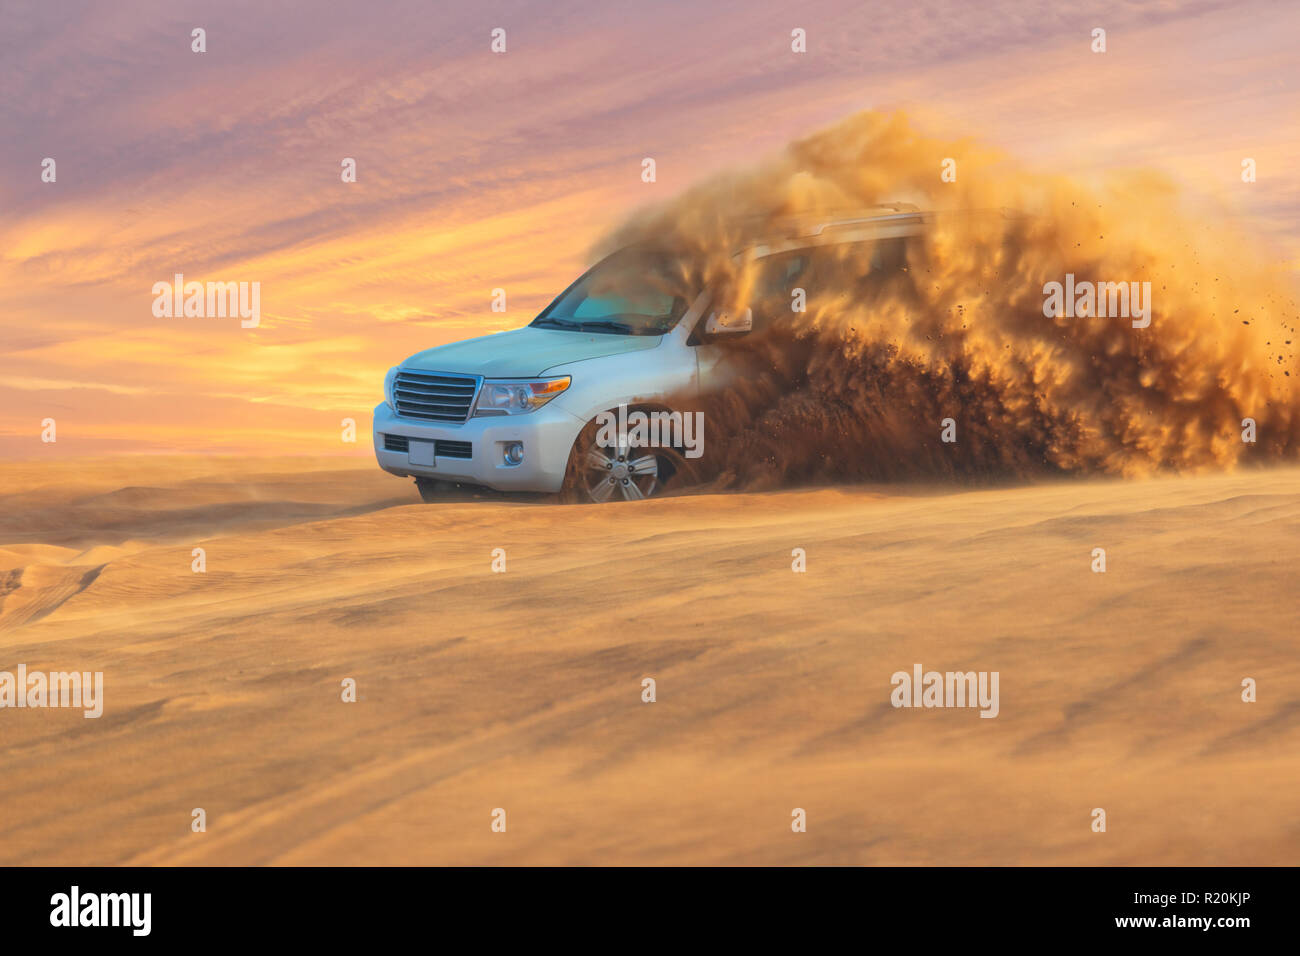 Off-road safari adventure with SUV in Arabian Desert at sunset. Offroad vehicle bashing through sand dunes in Dubai desert. Stock Photo